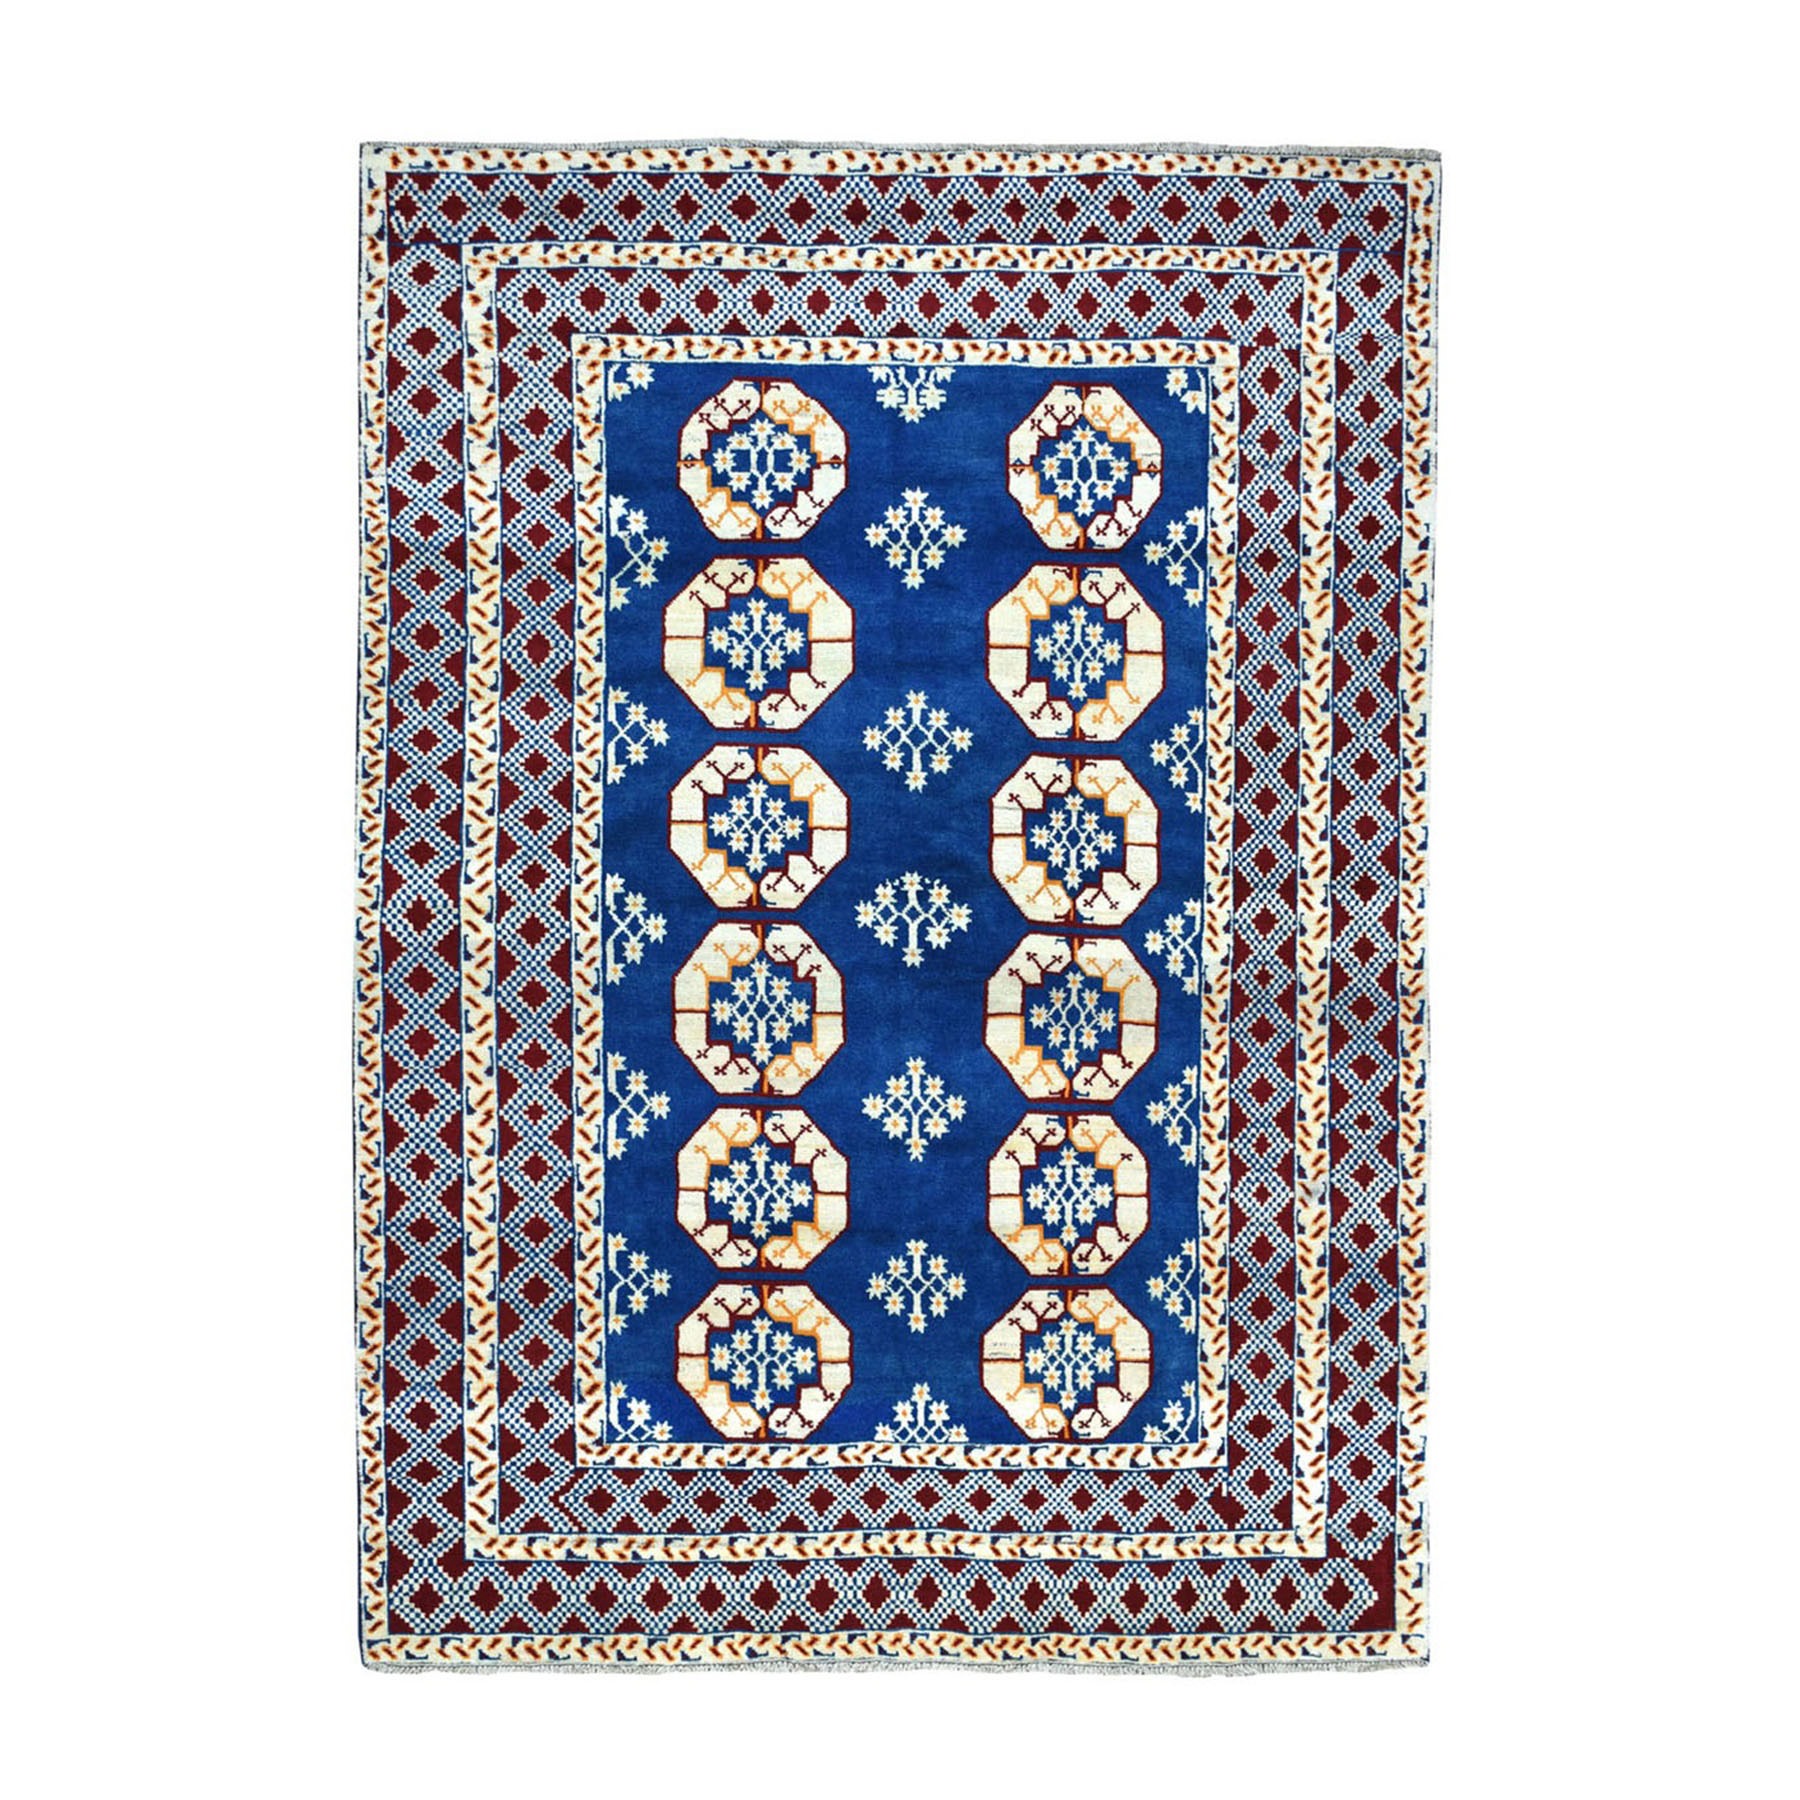 6'7"x9'4" Blue Elephant Feet Design Colorful Afghan Baluch Hand Woven Pure Wool Oriental Rug 